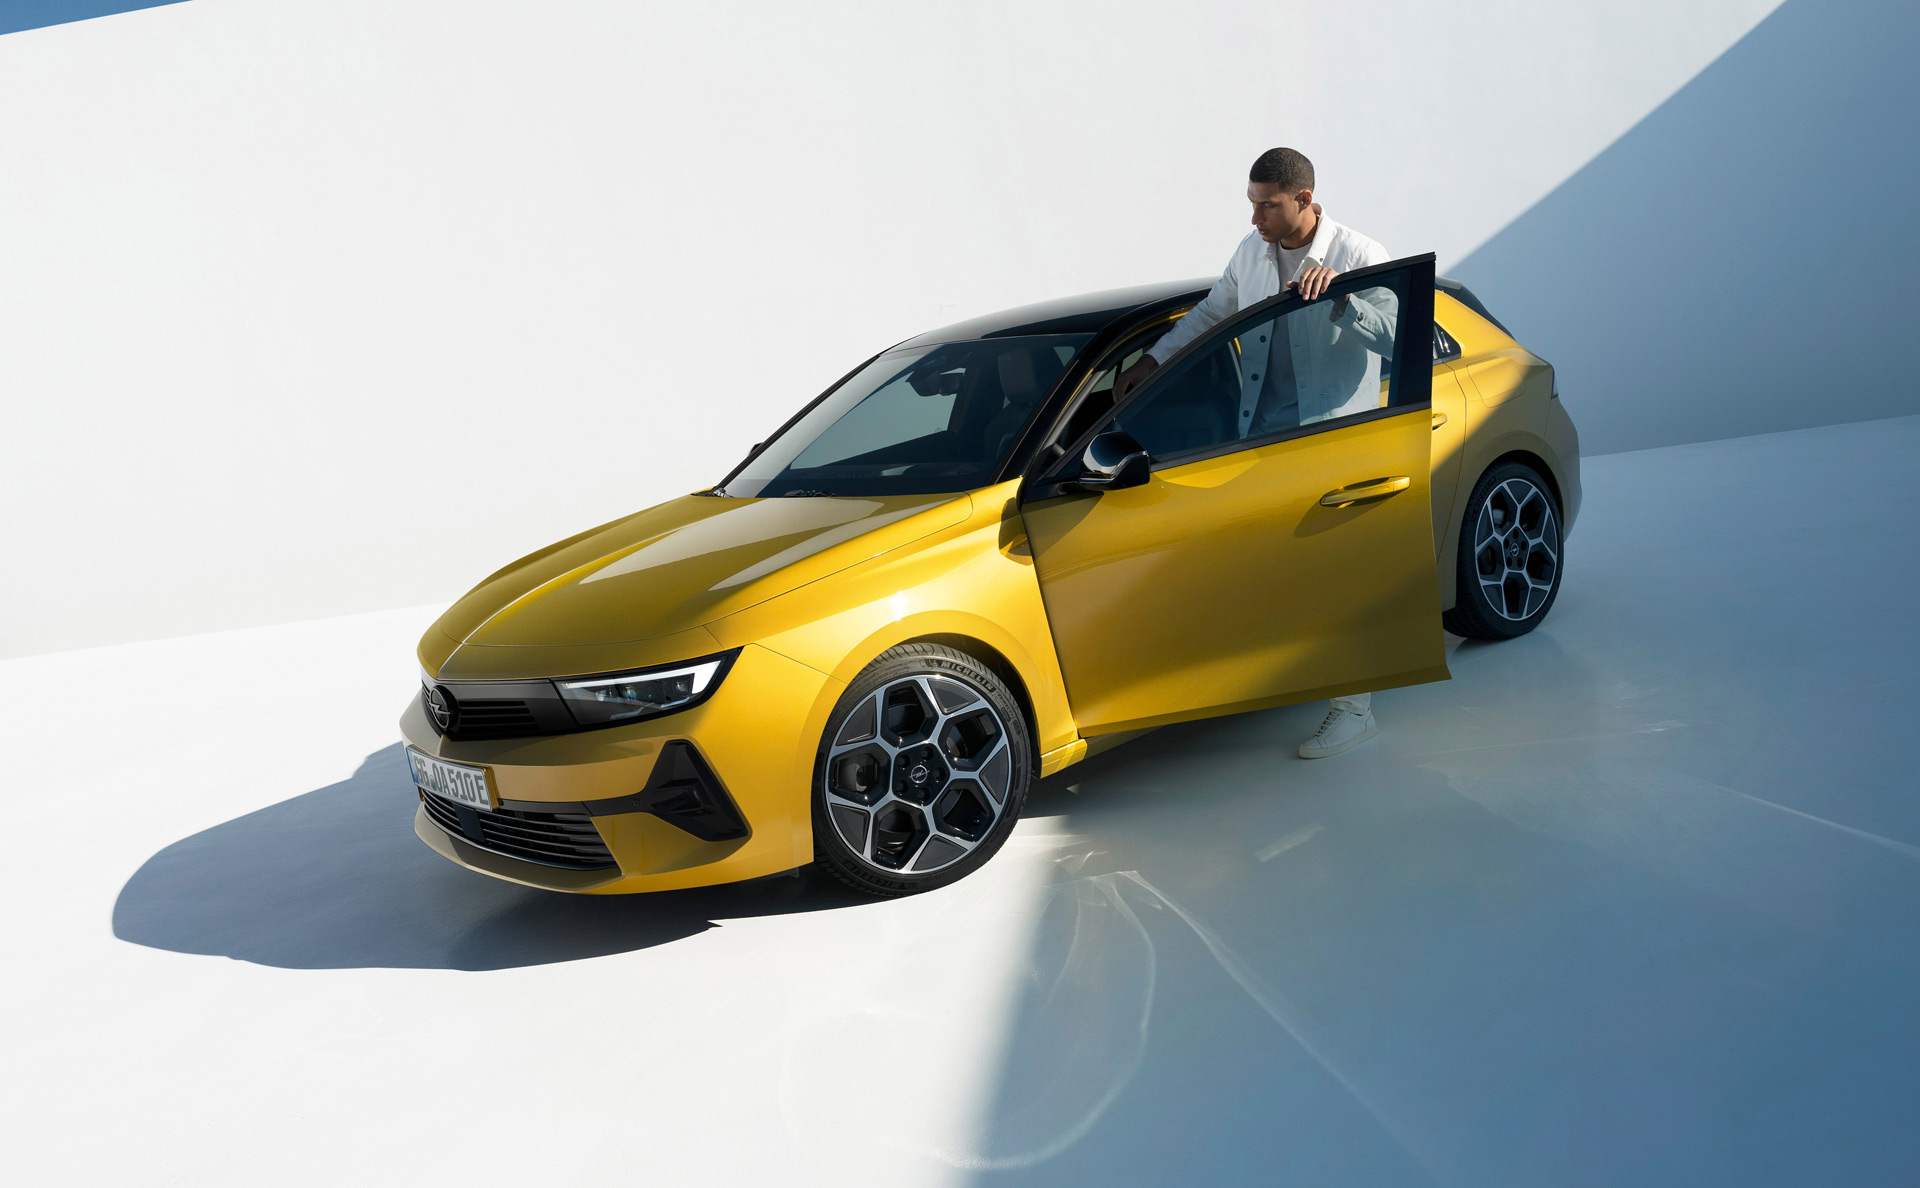 6th-Generation Opel Corsa Fully Revealed